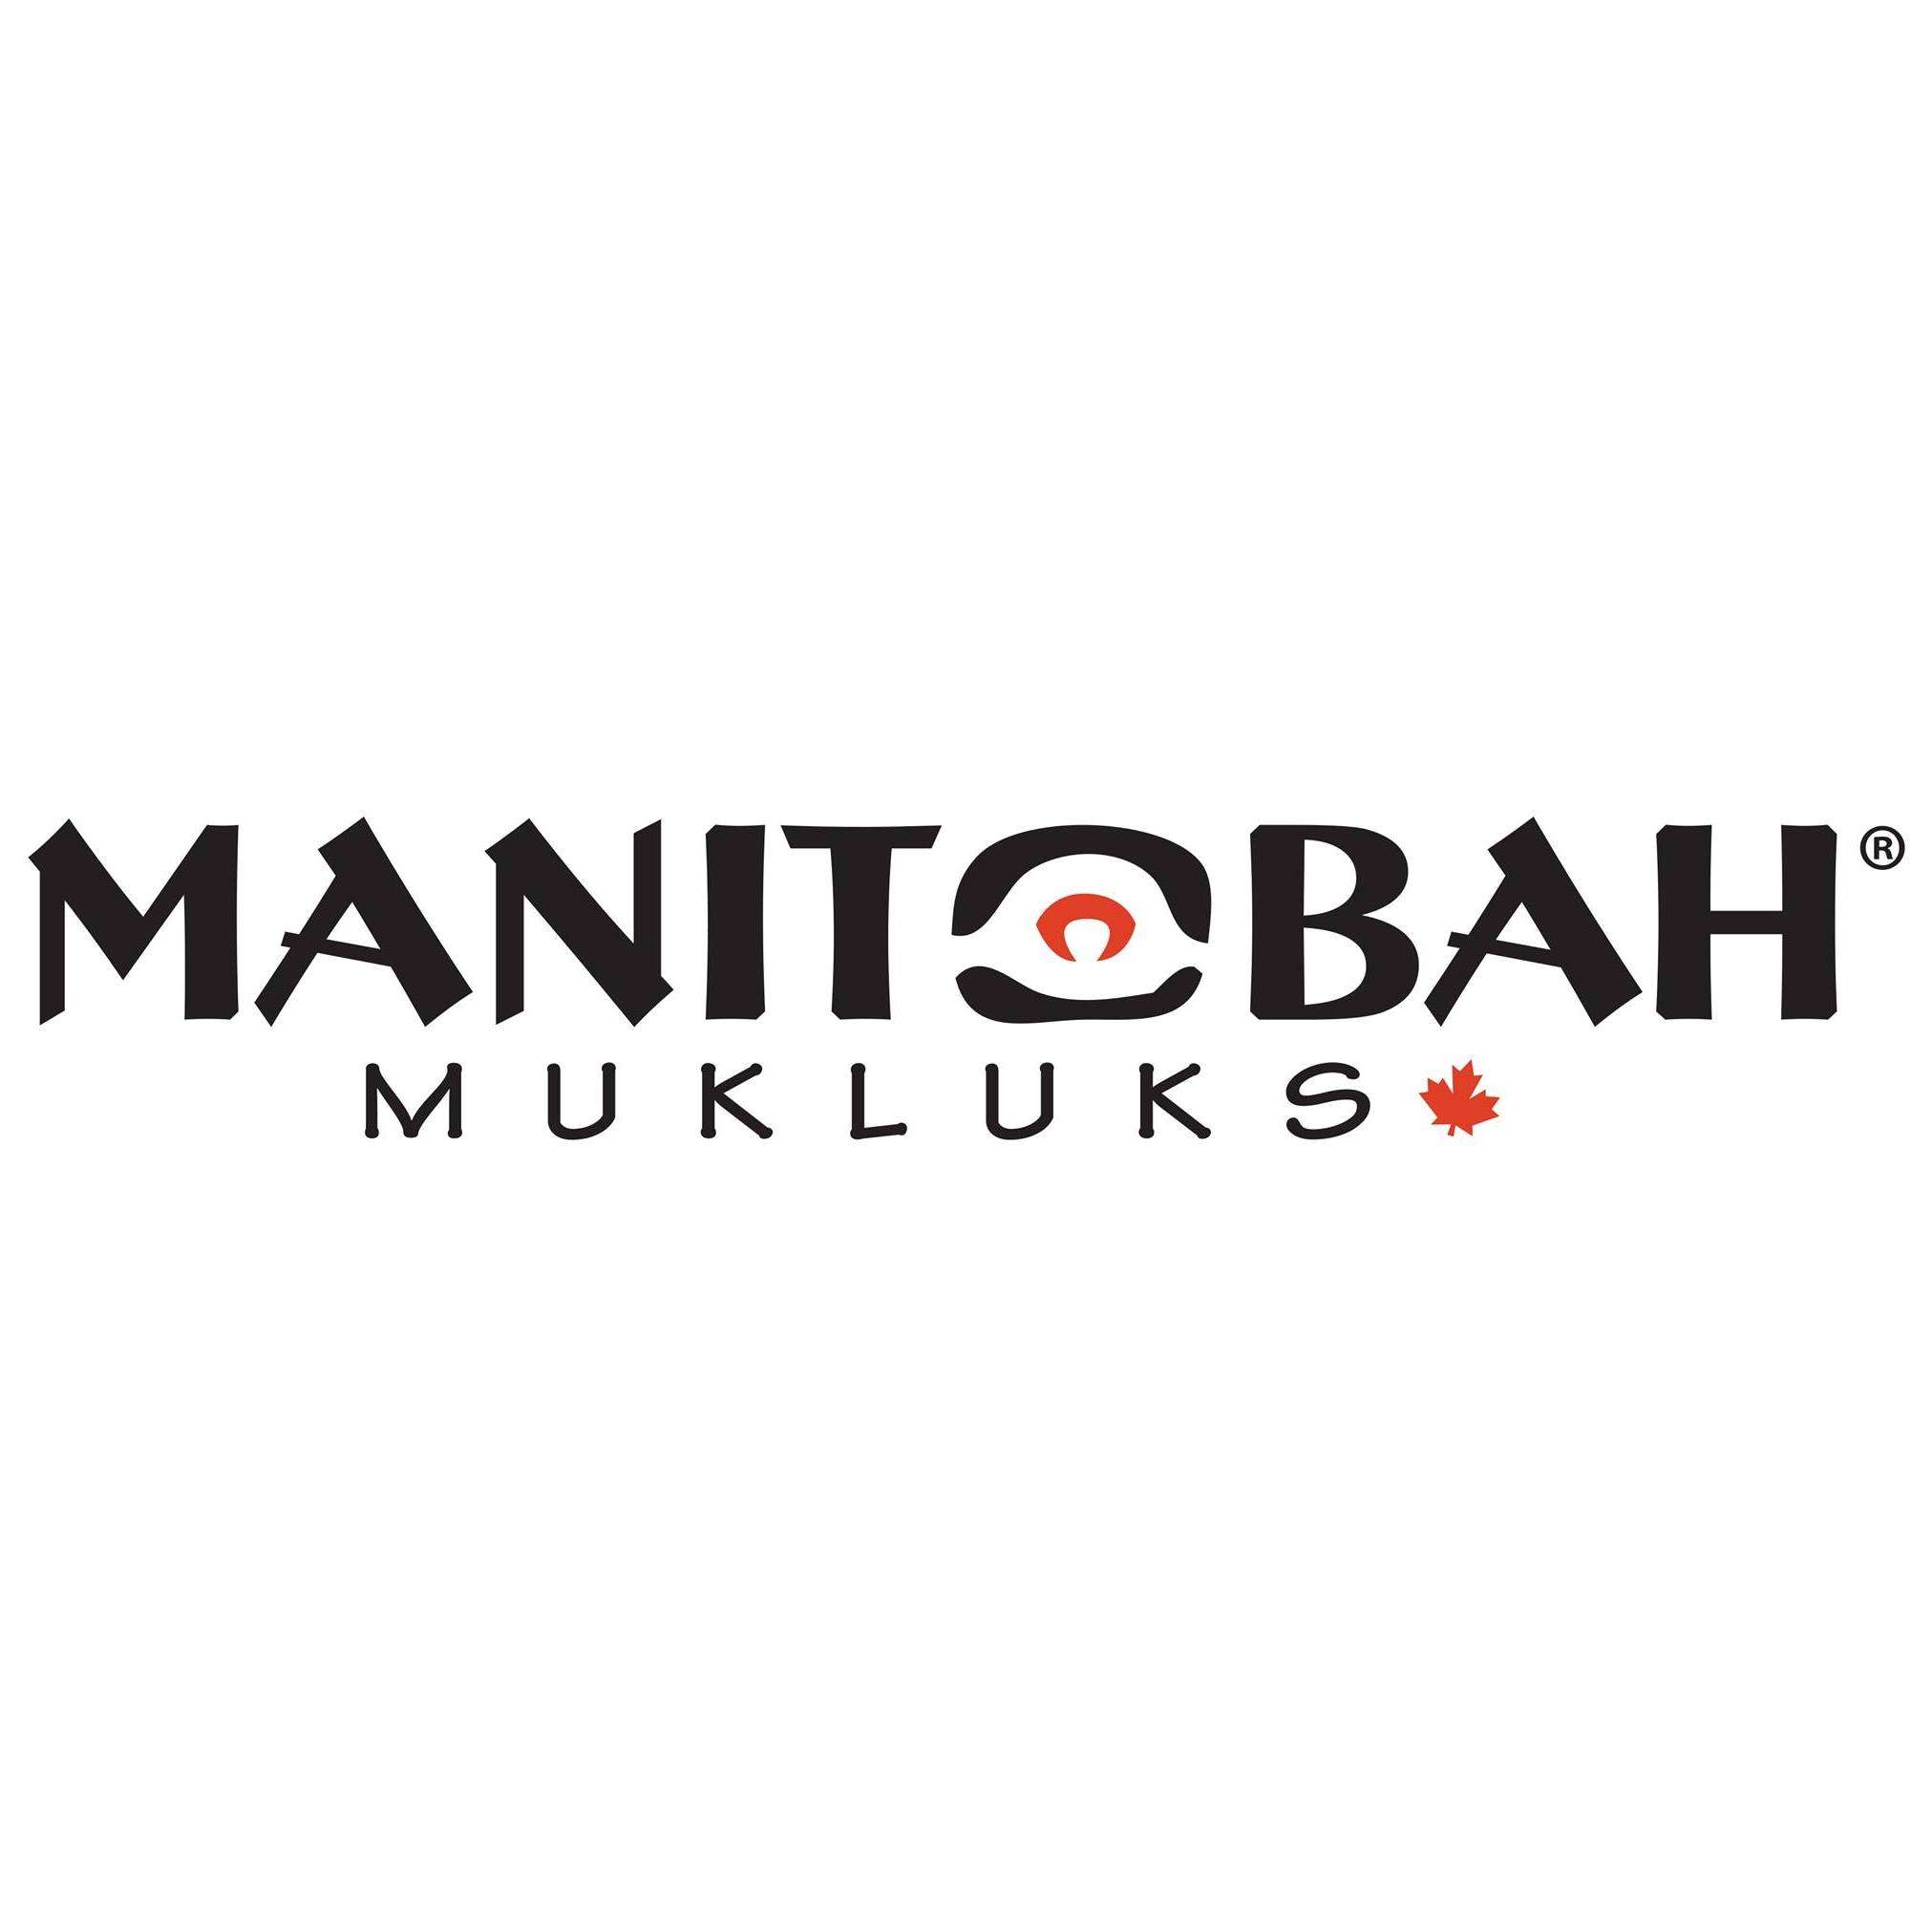 Manitobah Mukluks - Crunchbase Company Profile & Funding